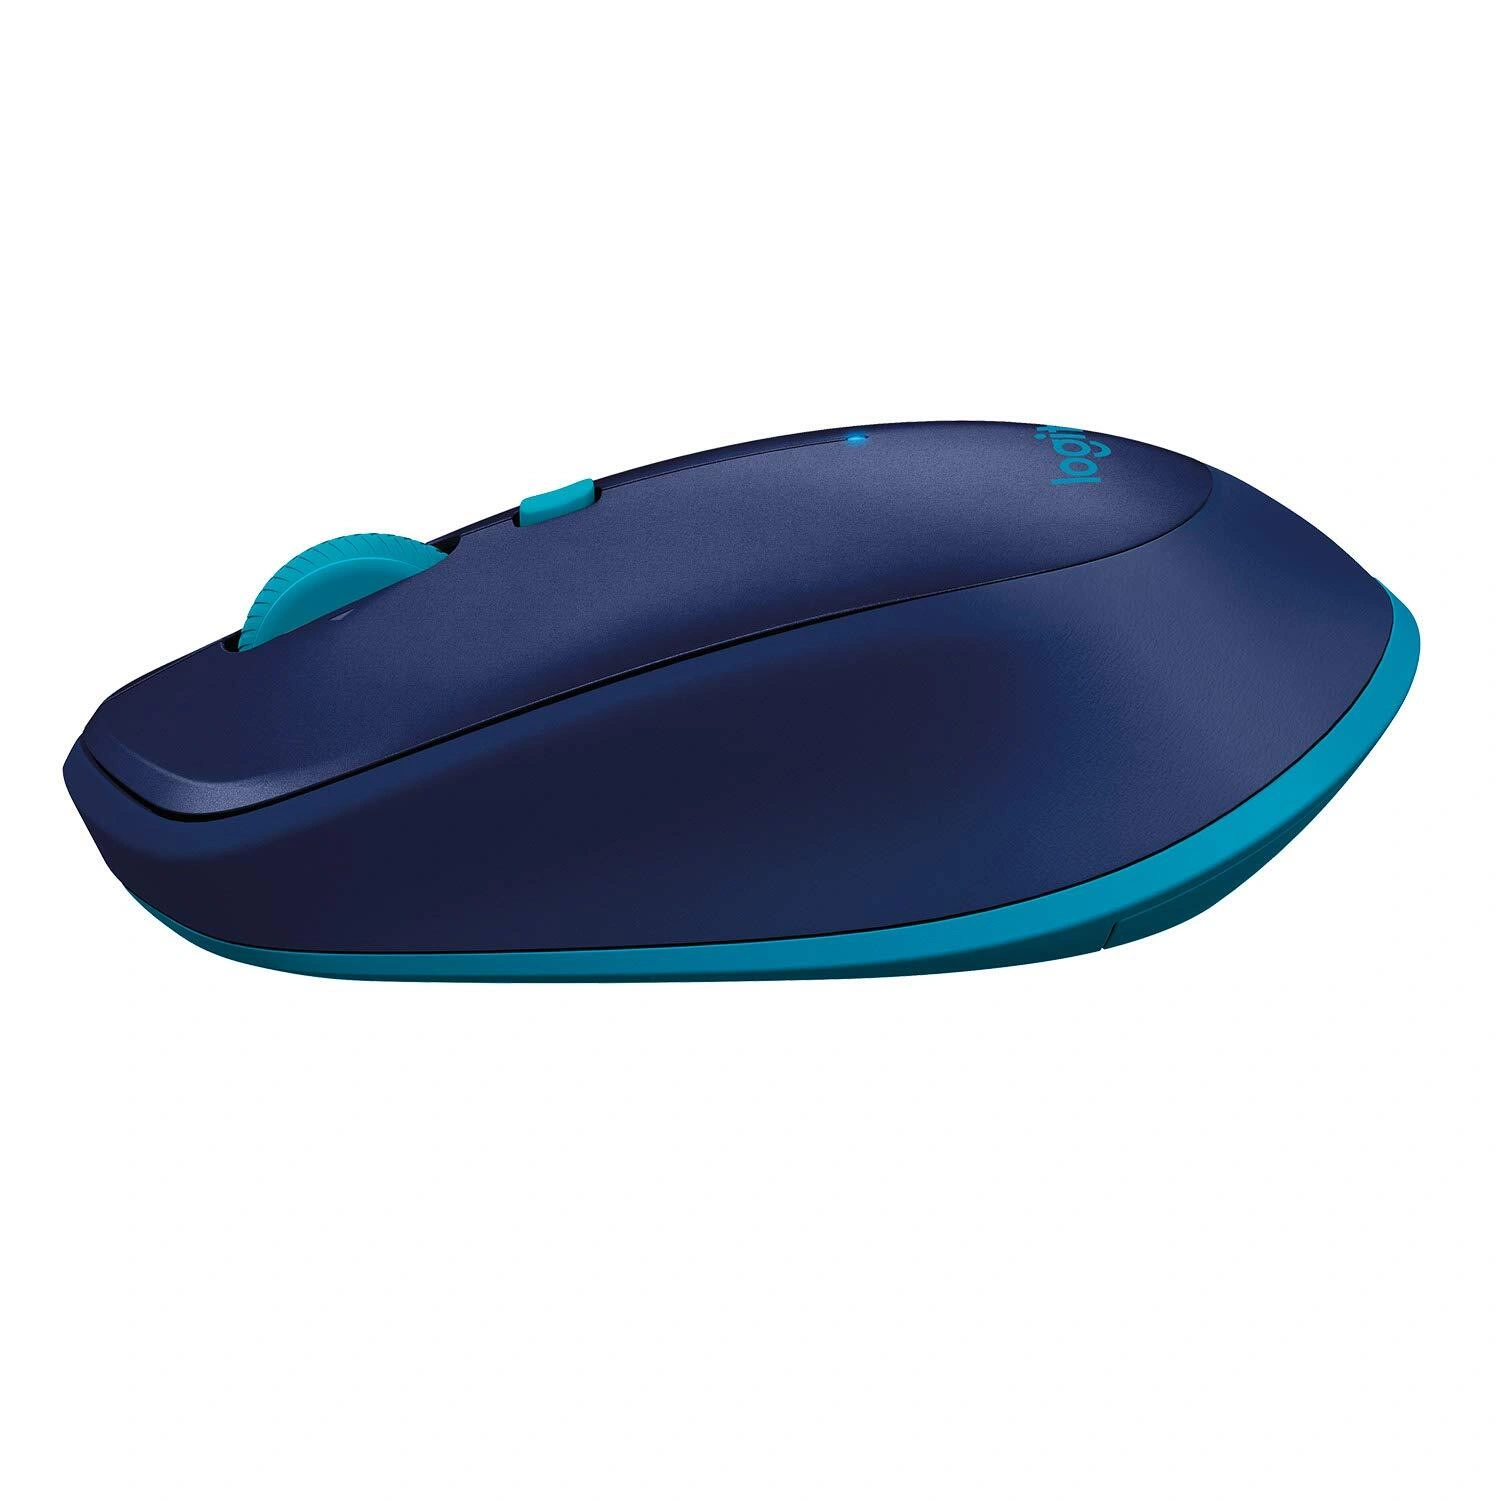 M337
Bluetooth mouse Blue-2